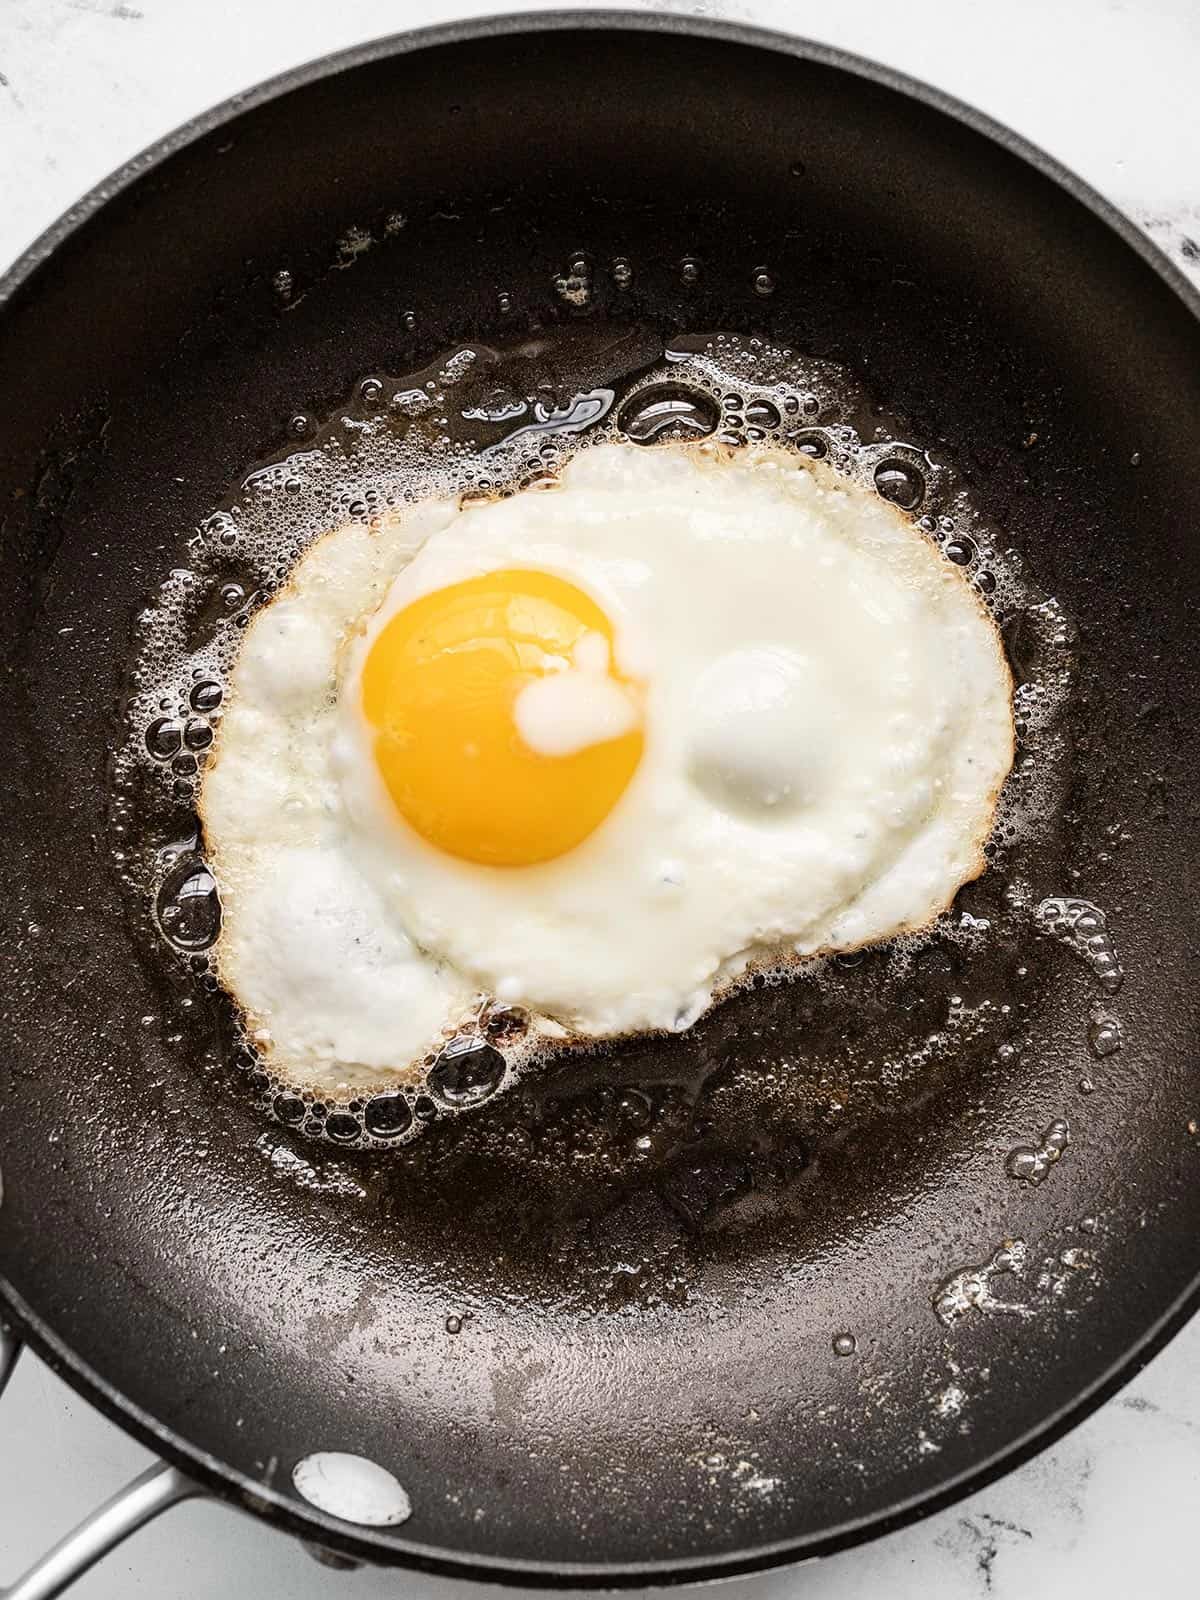 https://www.budgetbytes.com/wp-content/uploads/2022/05/How-to-Fry-an-Egg-V2.jpg